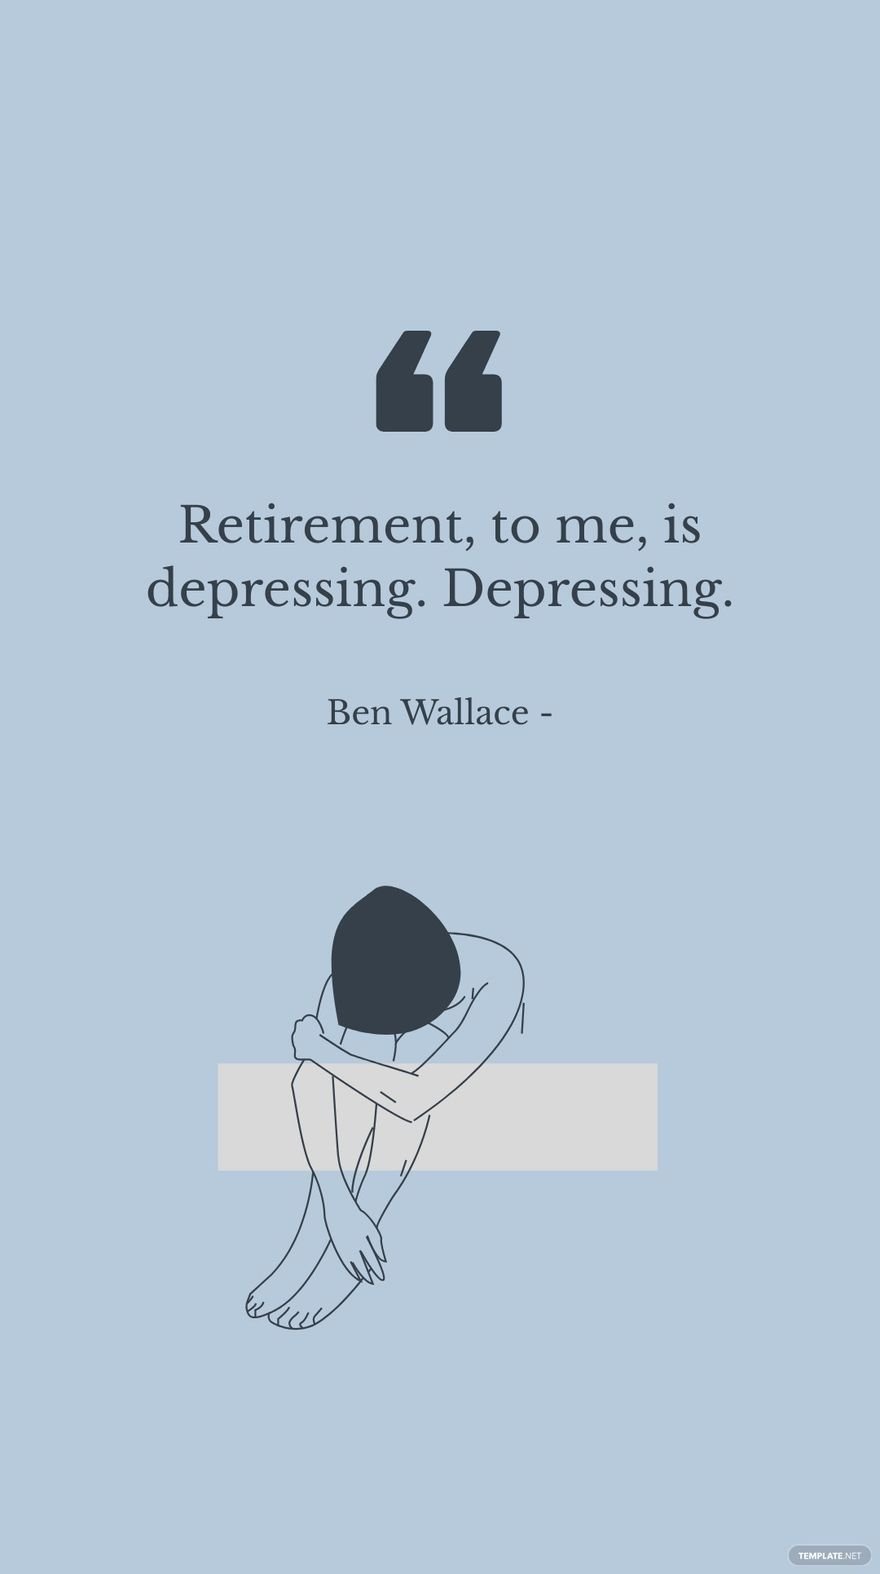 Free Ben Wallace - Retirement, to me, is depressing. Depressing.